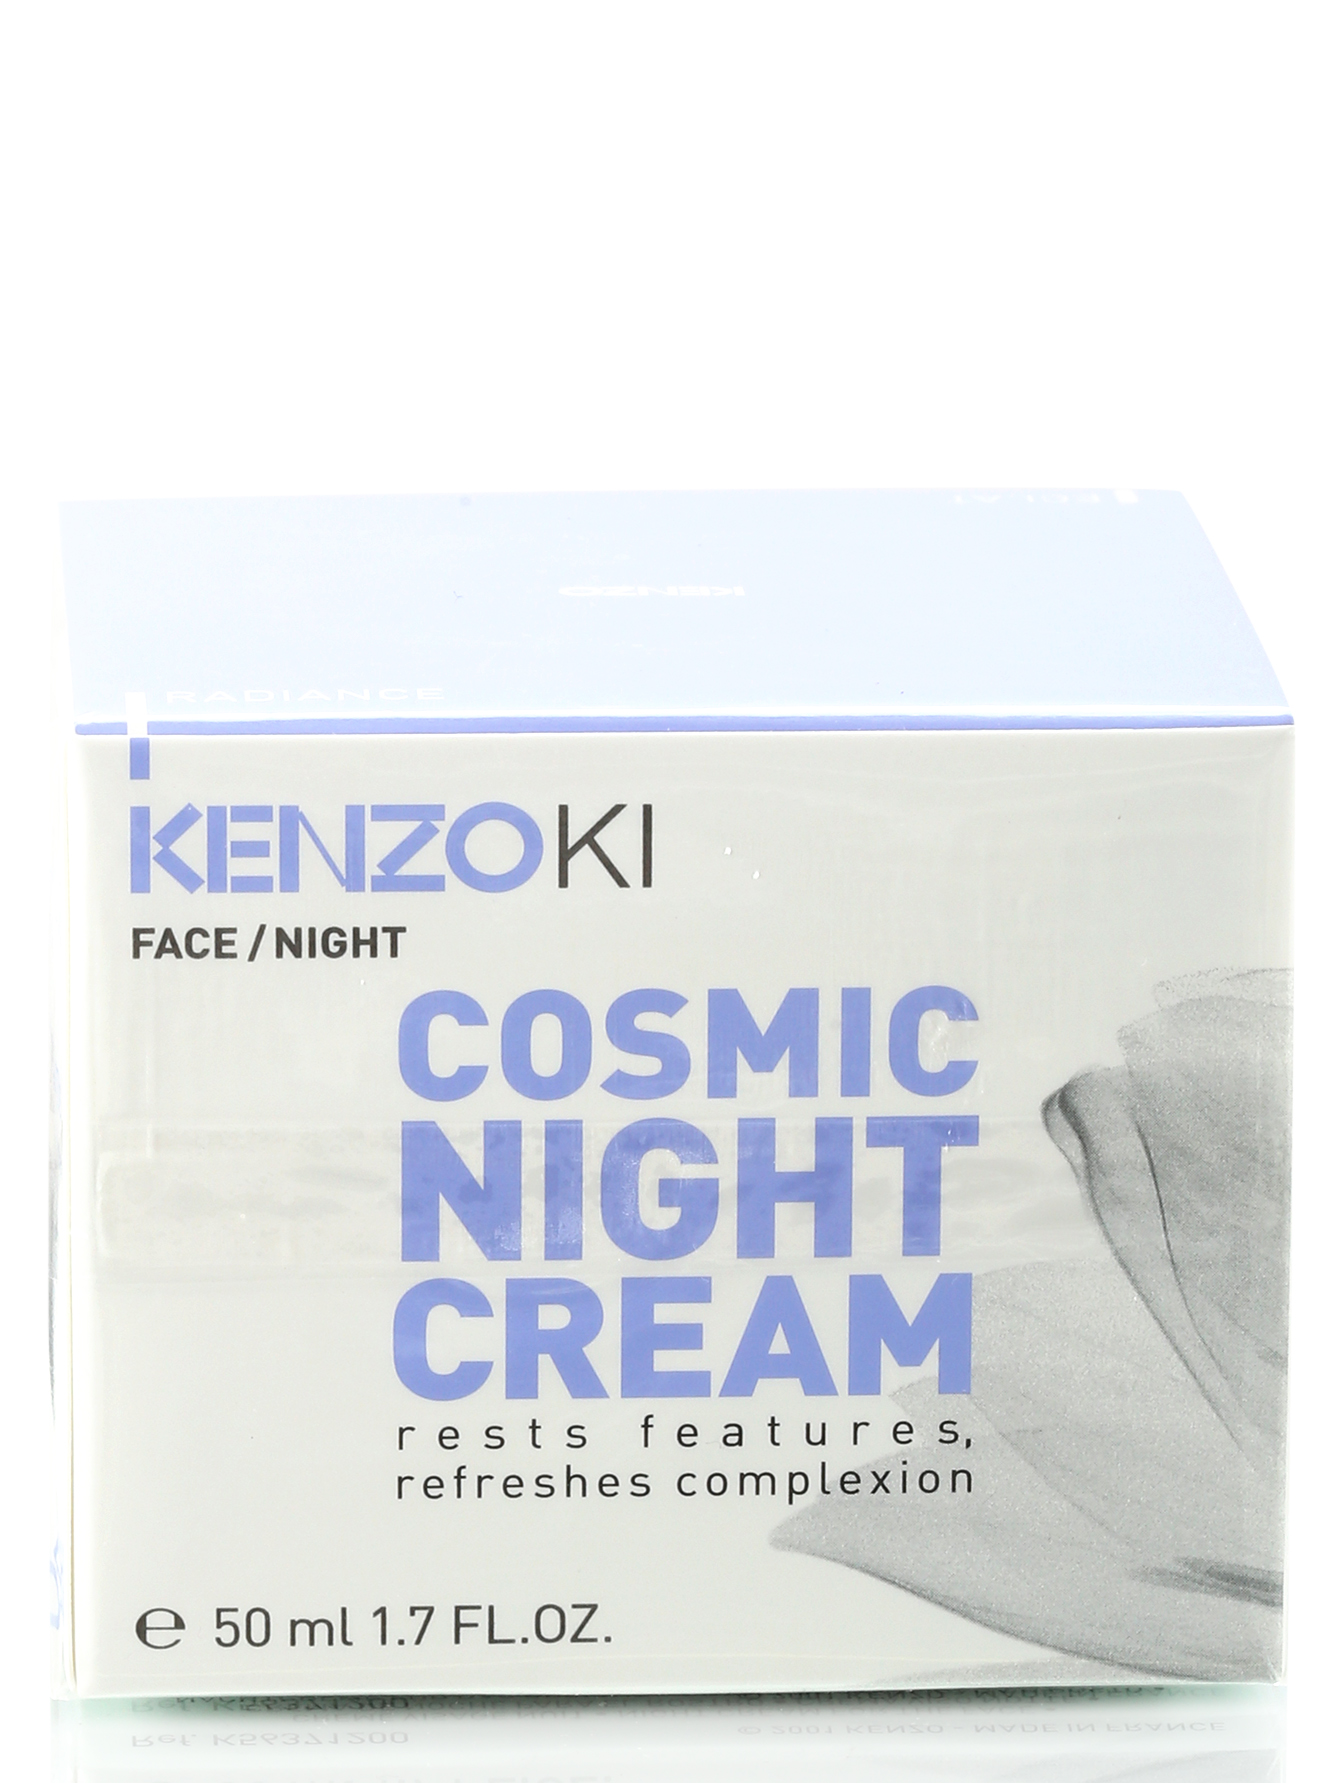 Ночной восстанавливающий крем для лица - Kenzoki, 50ml - Модель Верх-Низ